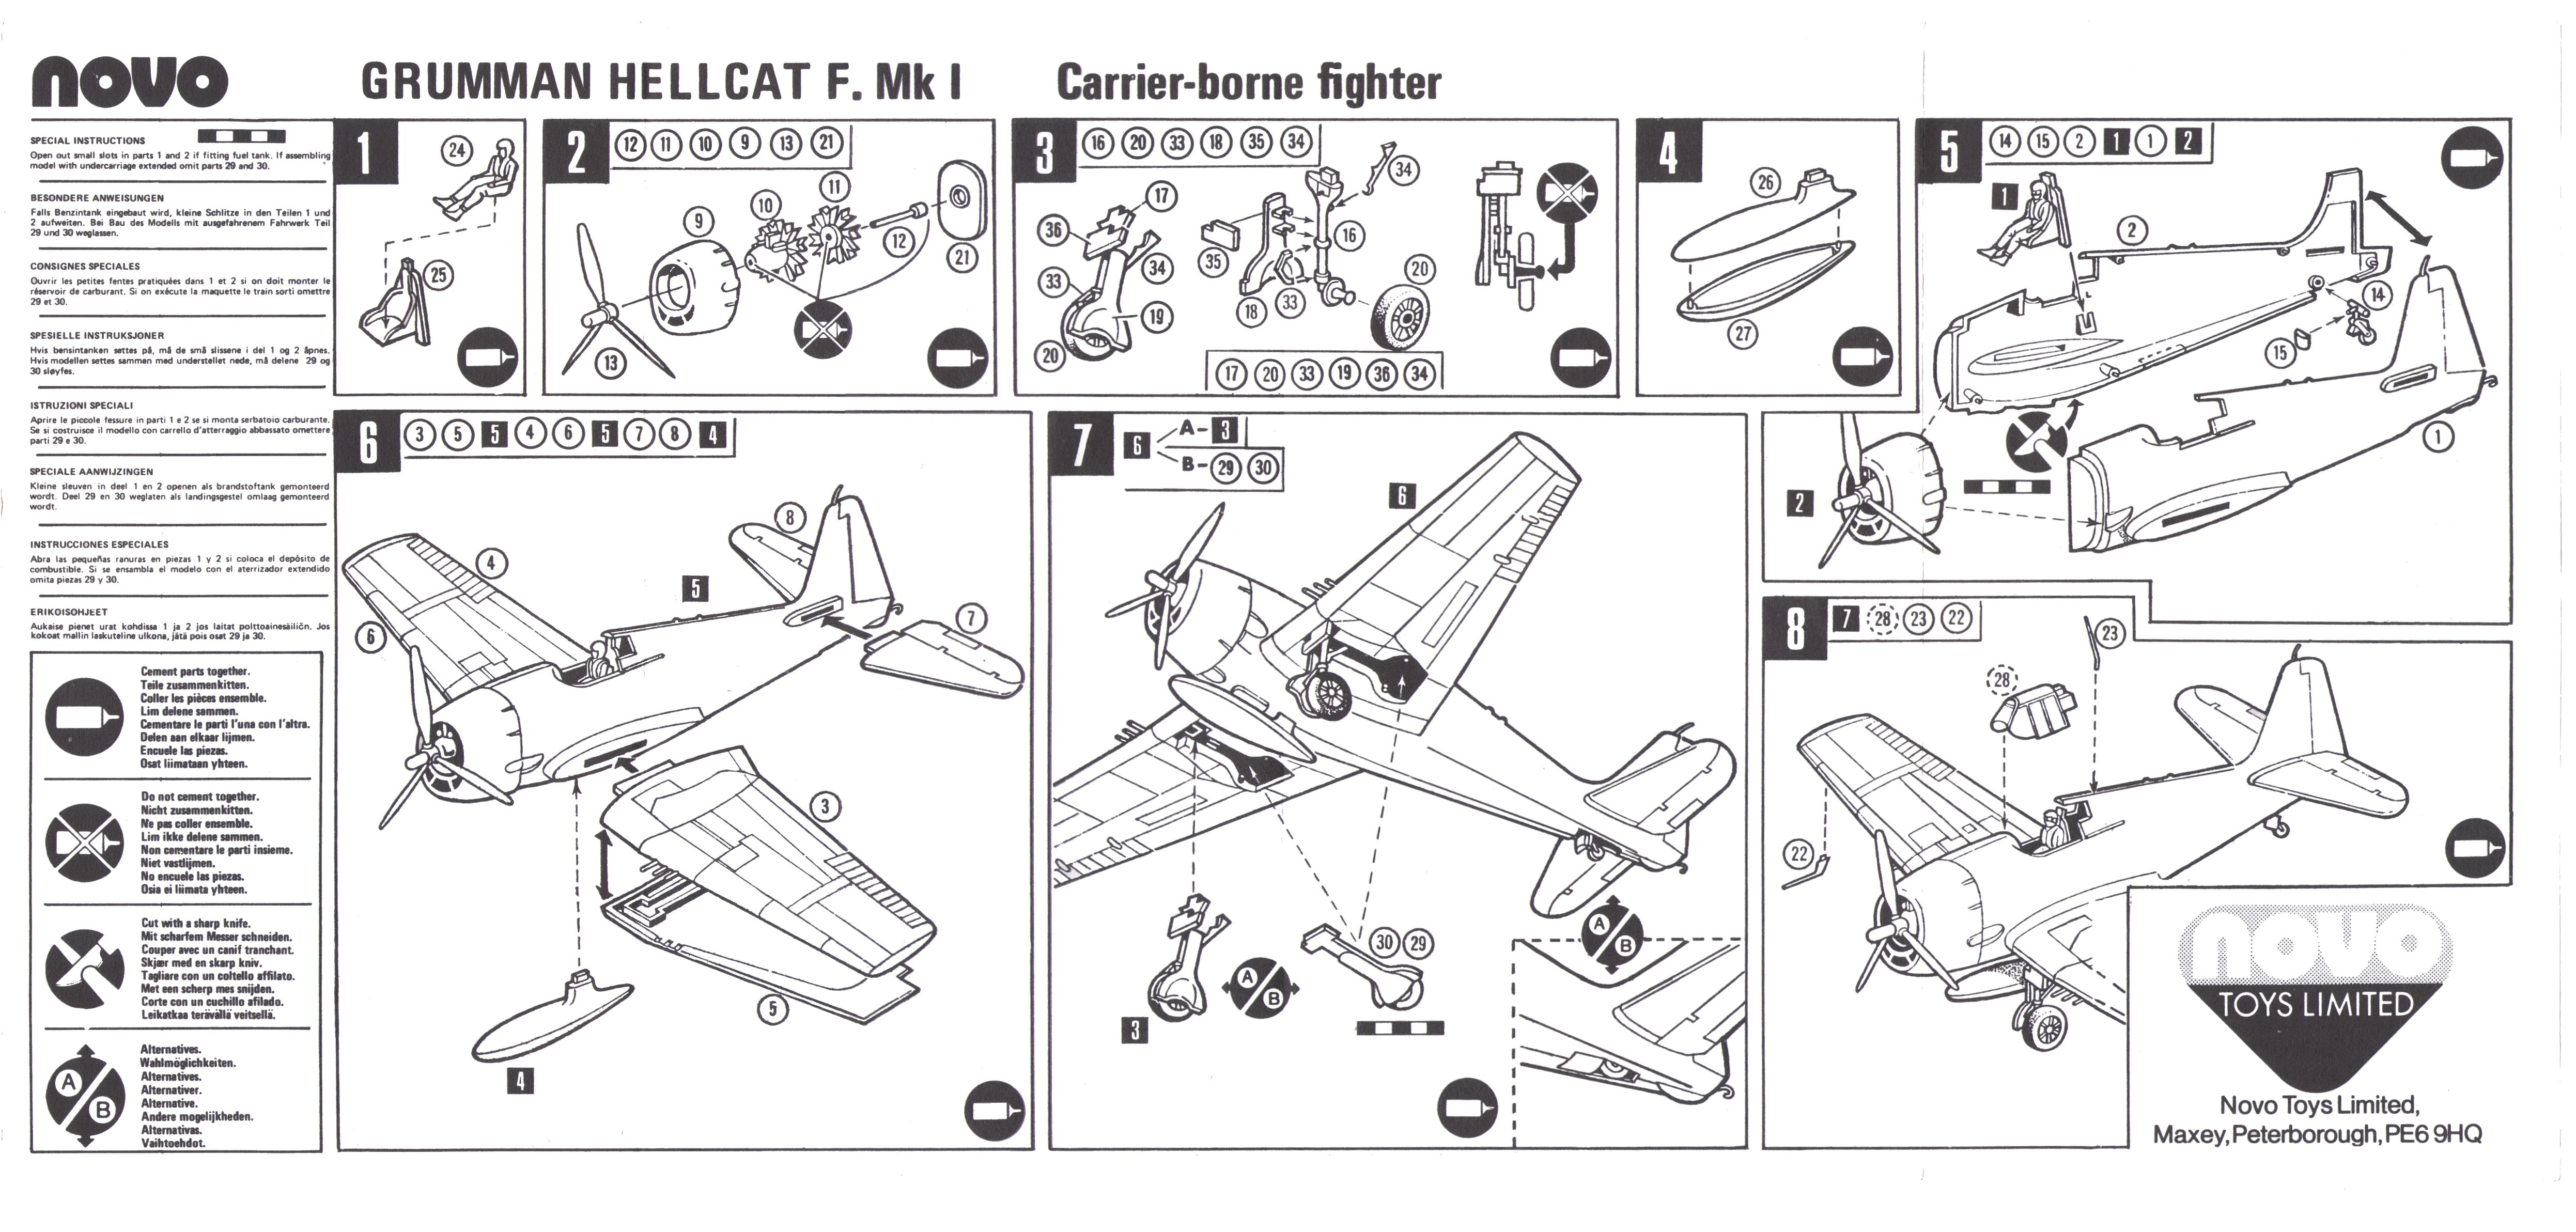 Инструкция по сборке NOVO Toys Ltd F245 Hellcat F.M.1